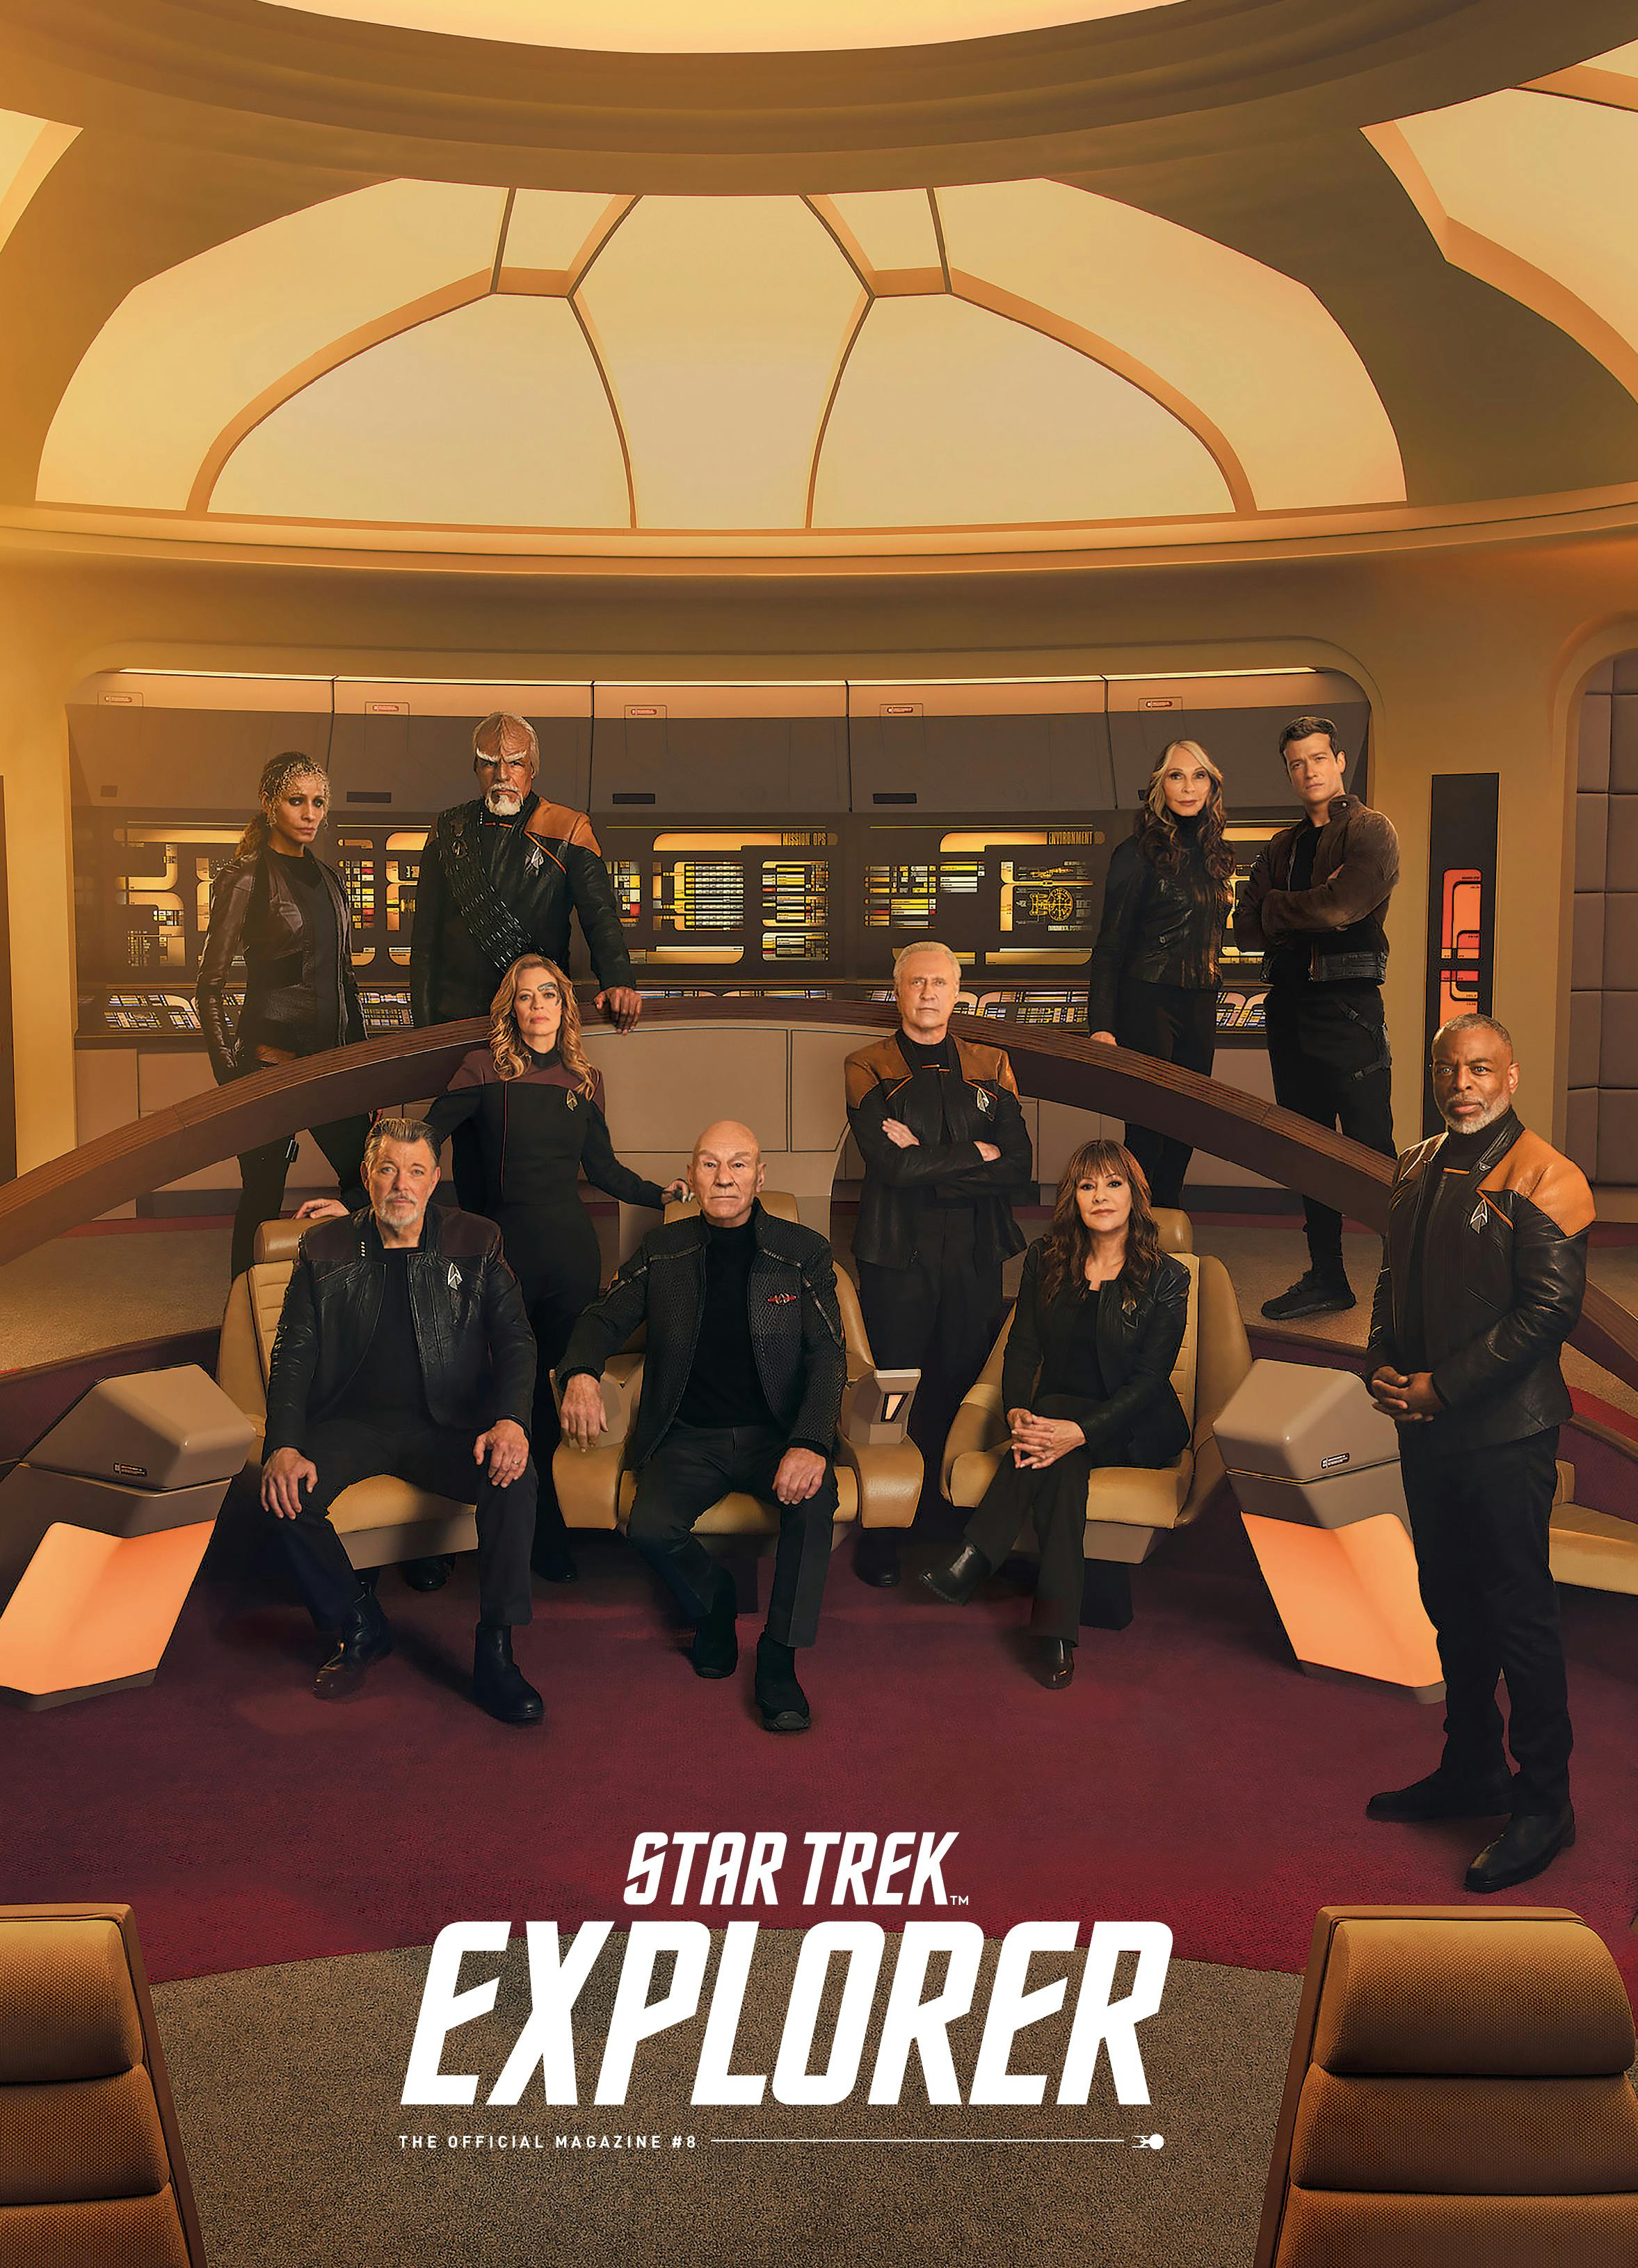 Star Trek Explorer #8 magazine diamond cover featuring a promotional still of the Star Trek: Picard Season 3 cast on the bridge of the Enterprise-D